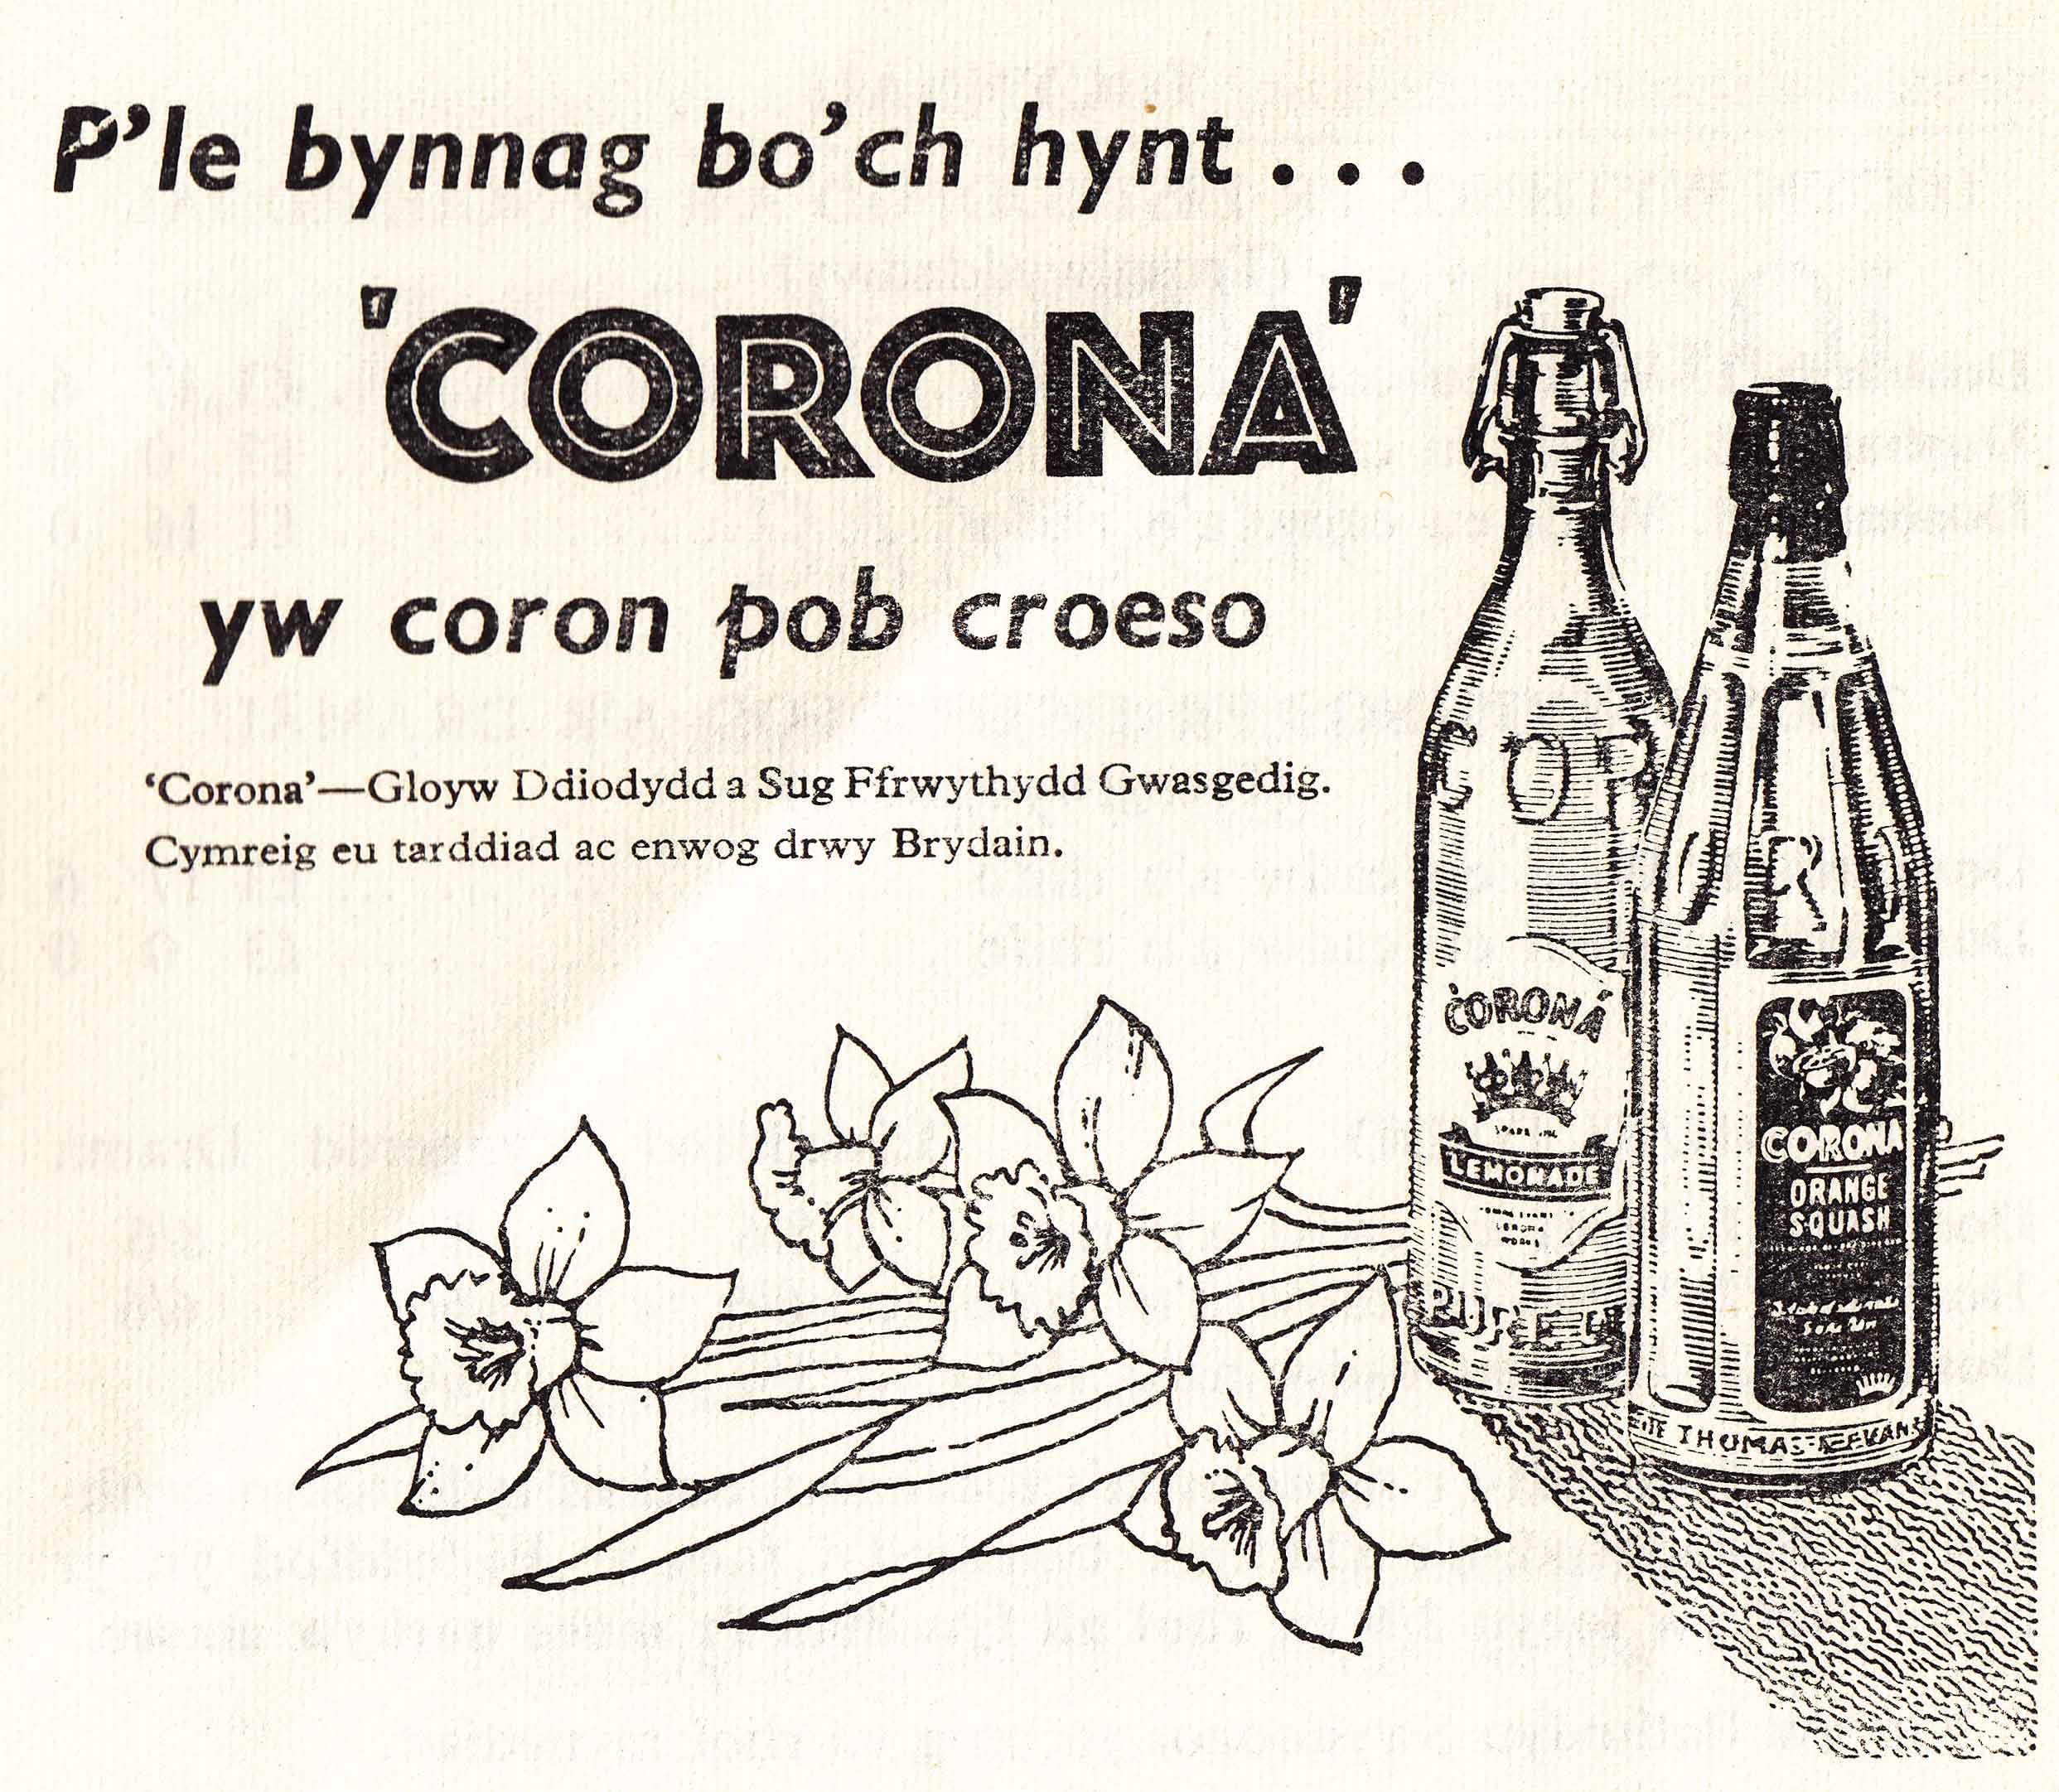 Corona pop advertisement [Welsh]